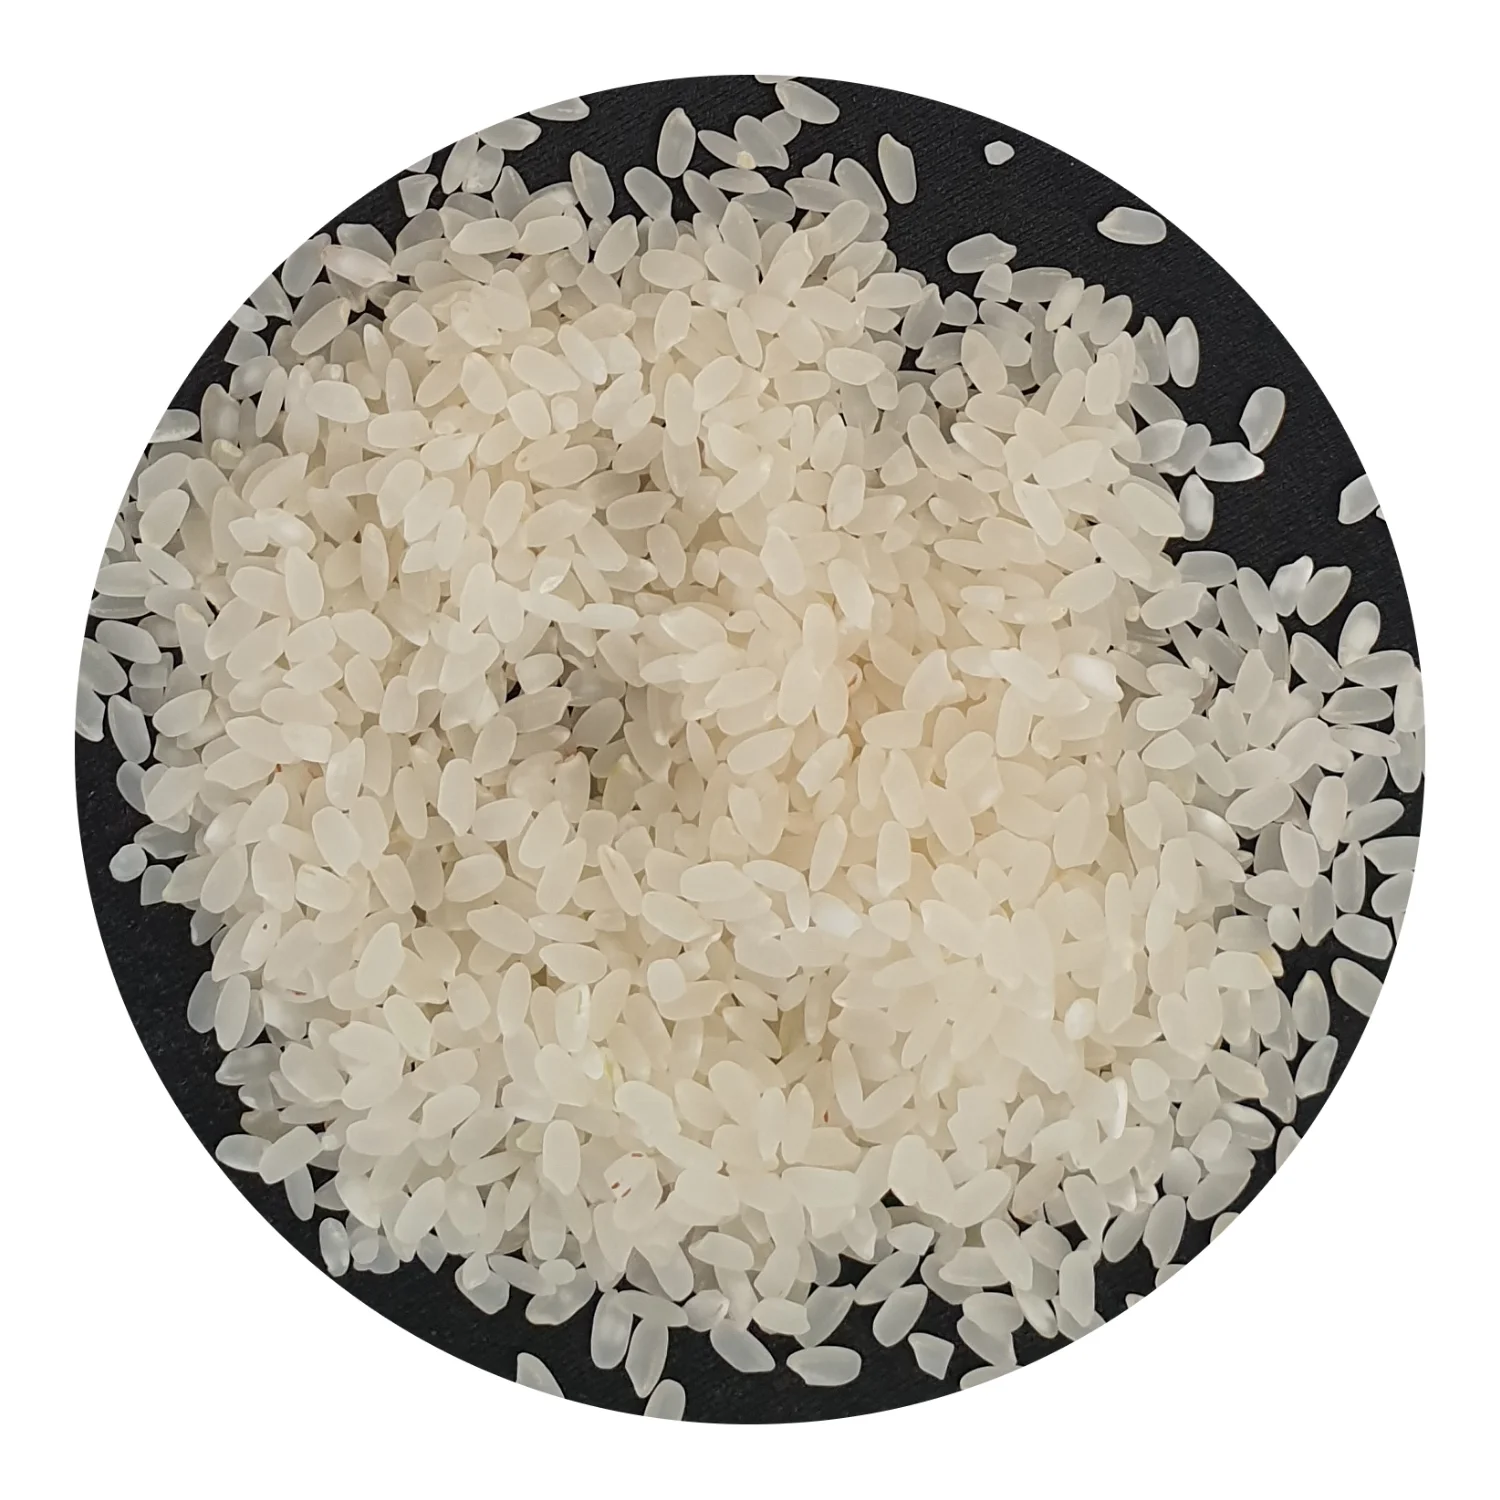 White Rice Agriculture Organic Grain